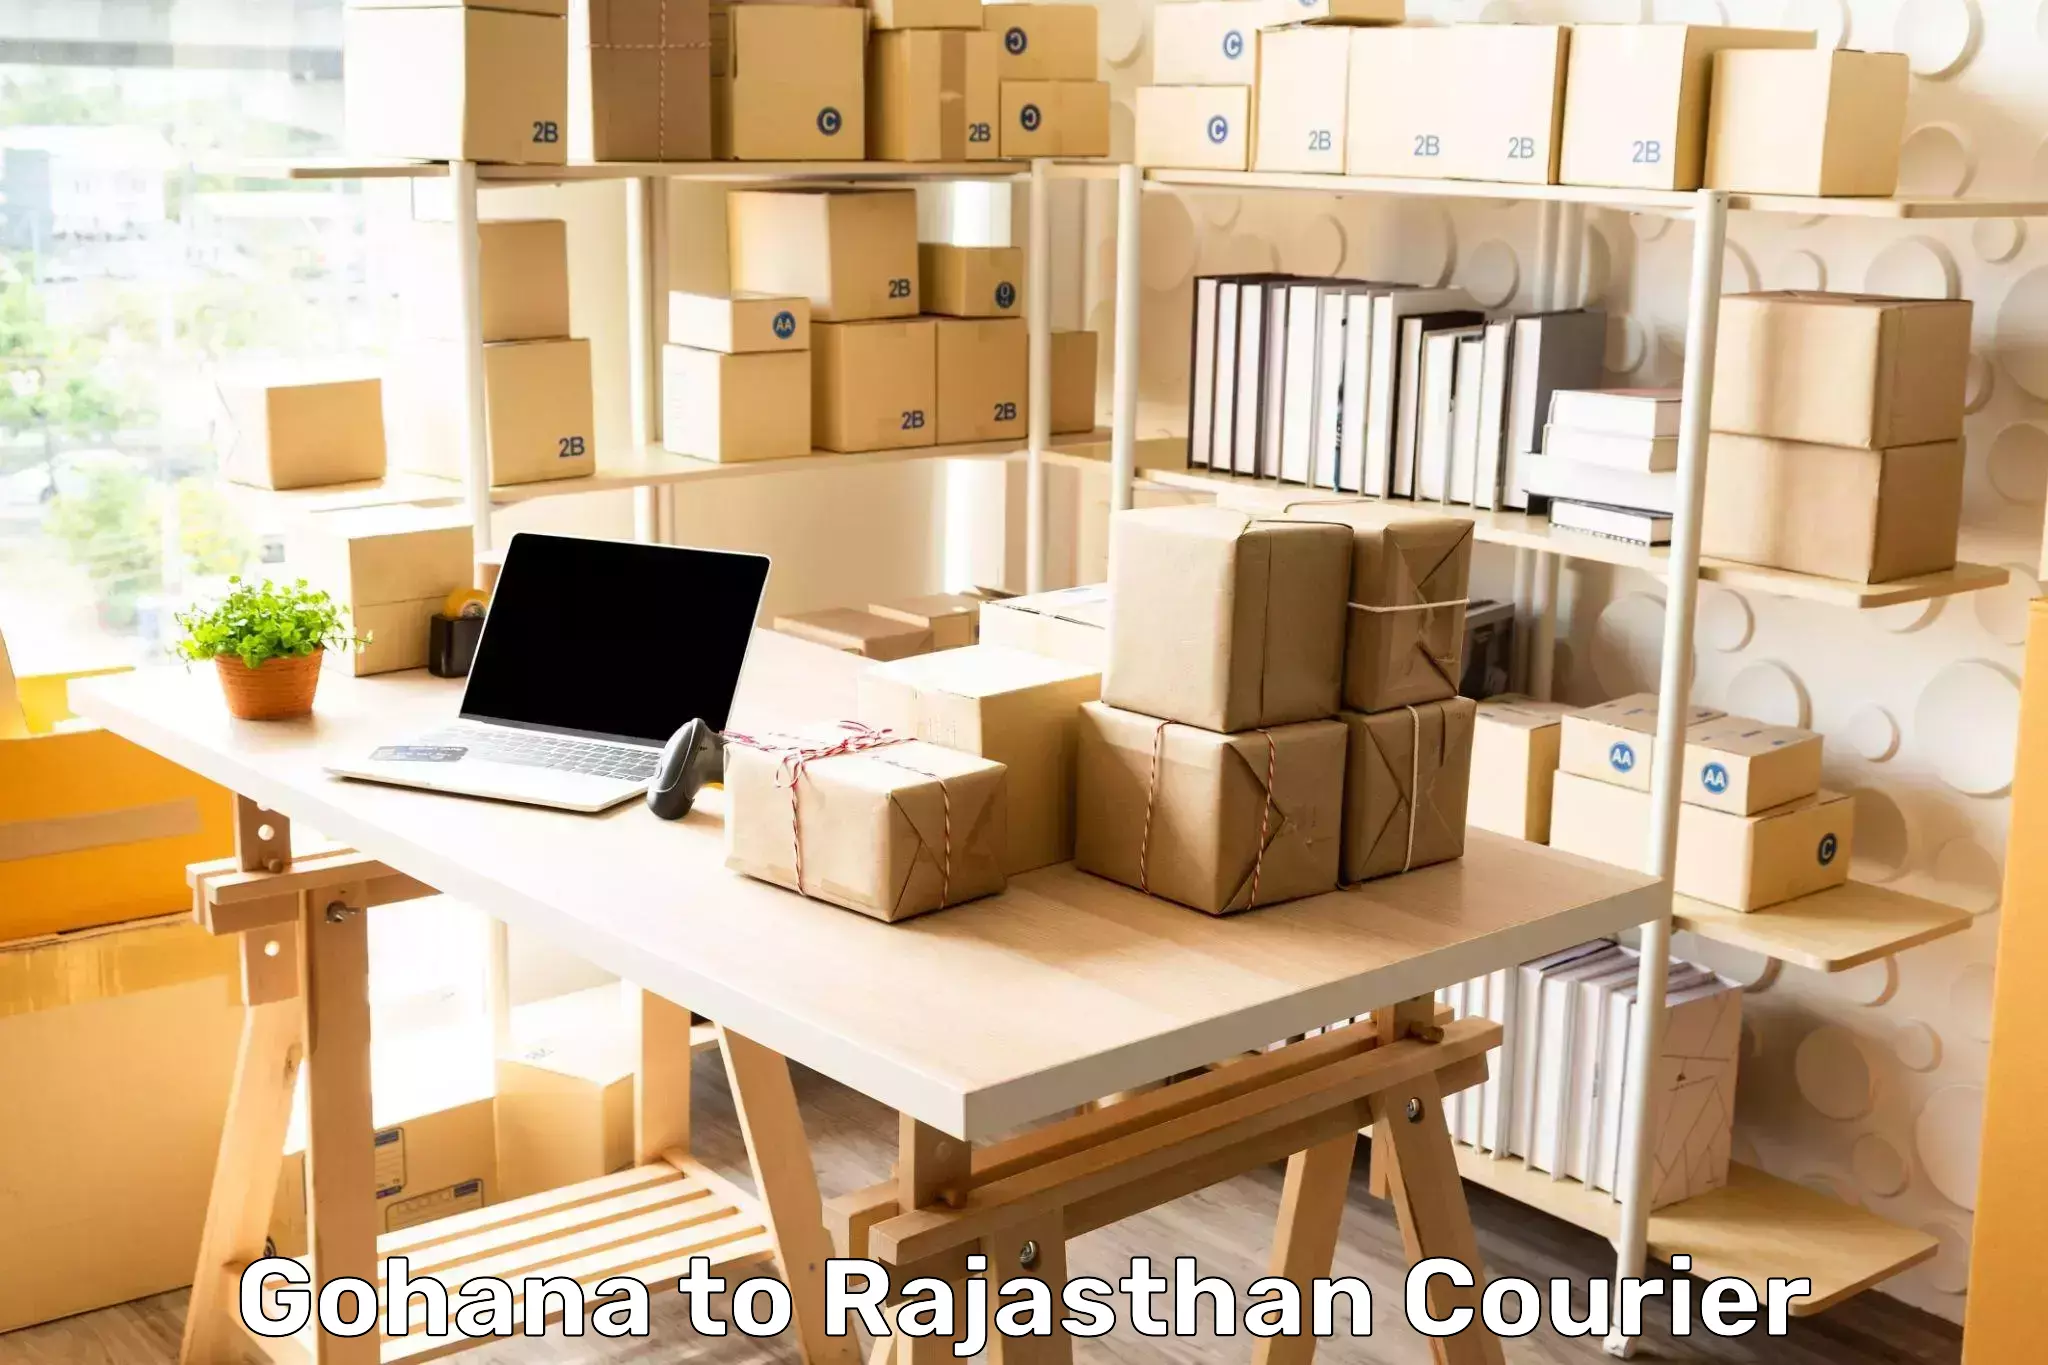 Express postal services Gohana to Rajasthan